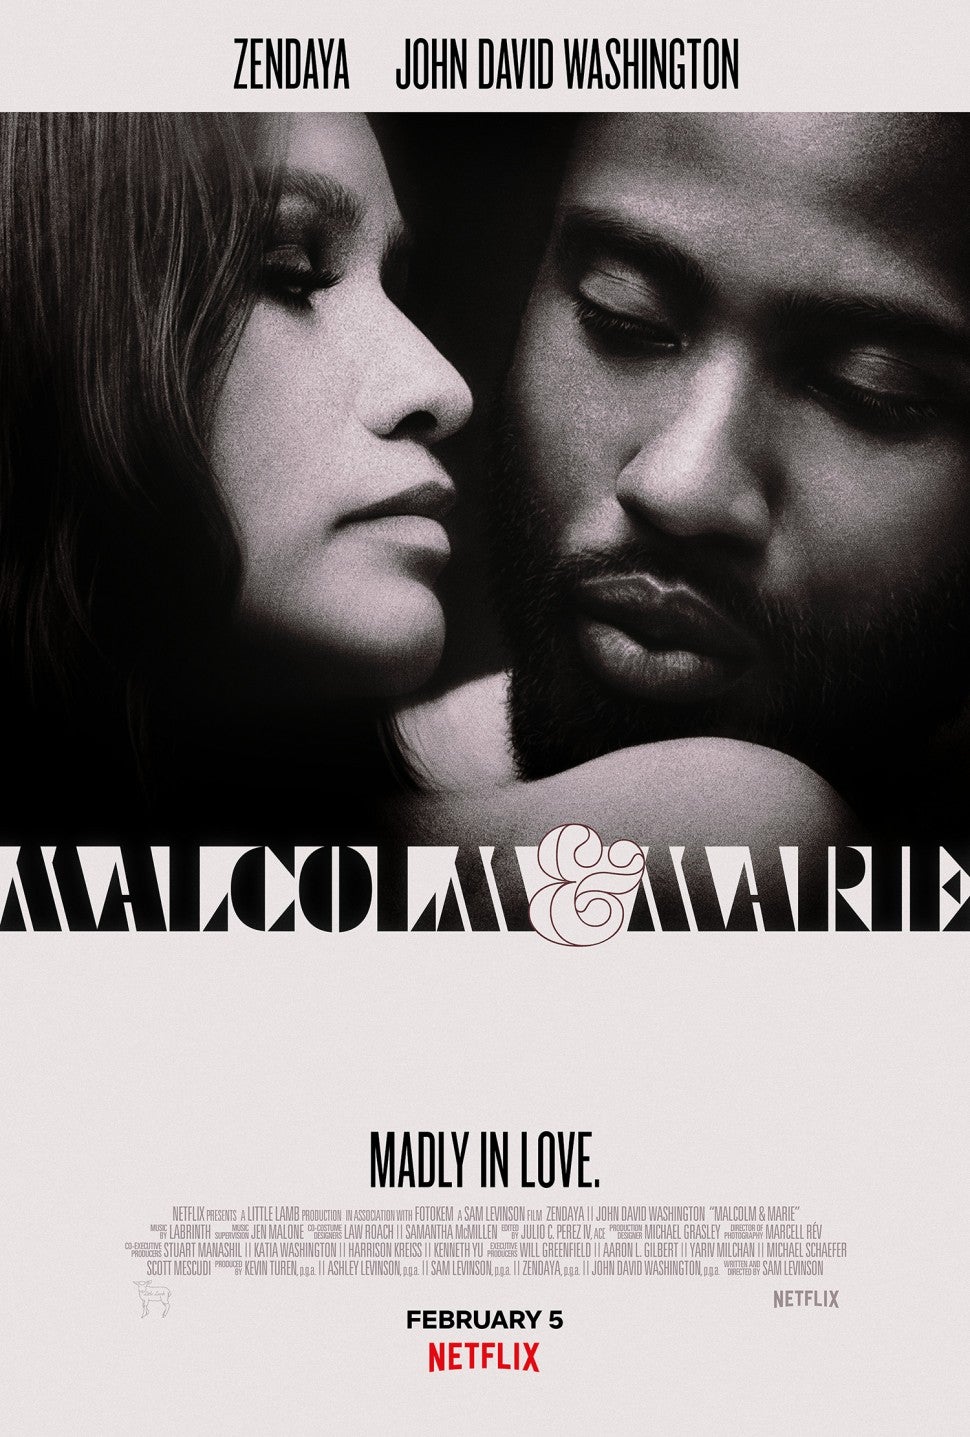 Malcom and Marie